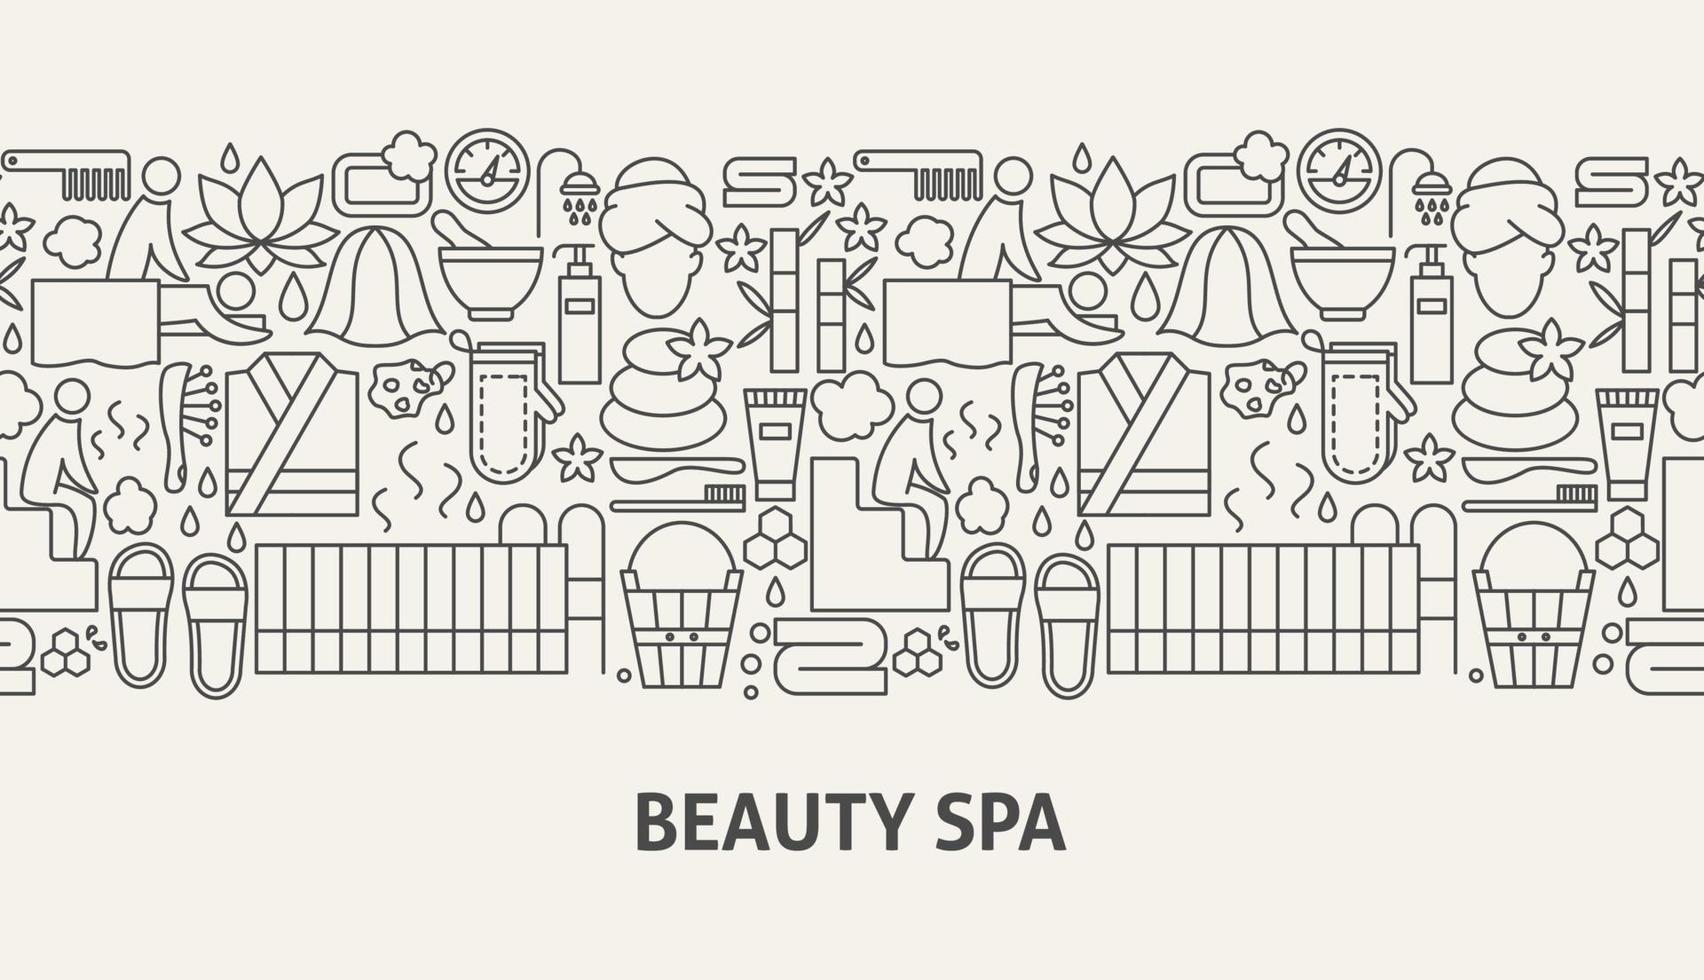 Beauty Spa Banner Concept vector